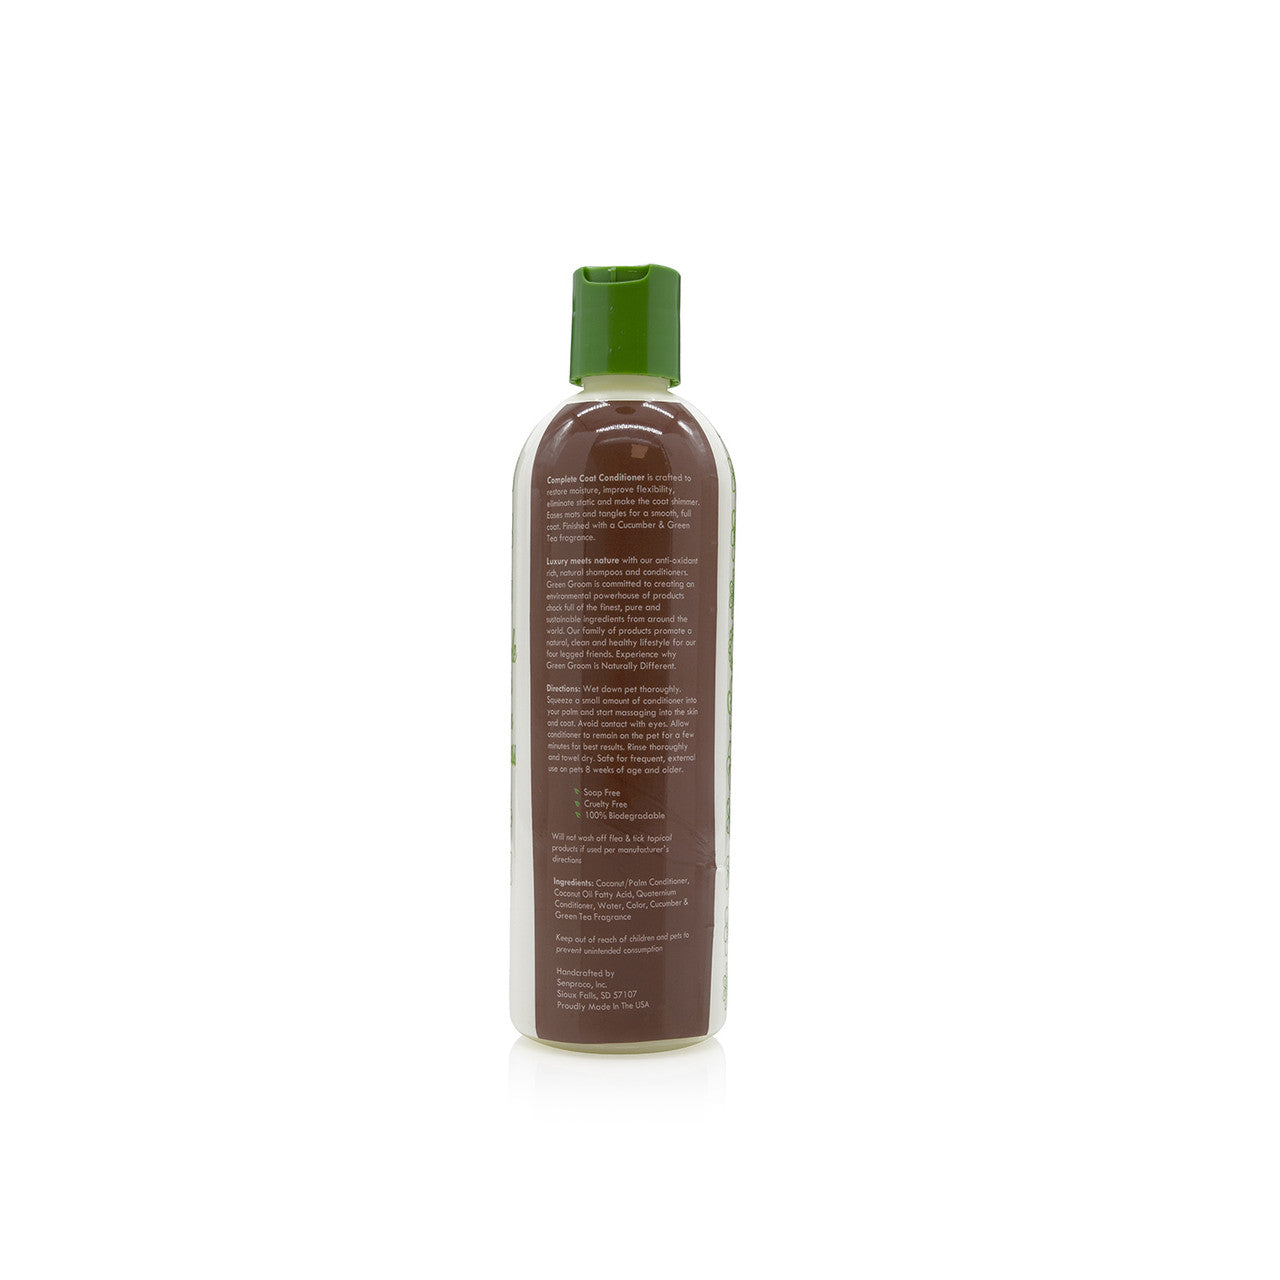 Green Groom Black Dog Shampoo, 1 Gallon-Shampoo & Conditioner-Pet's Choice Supply